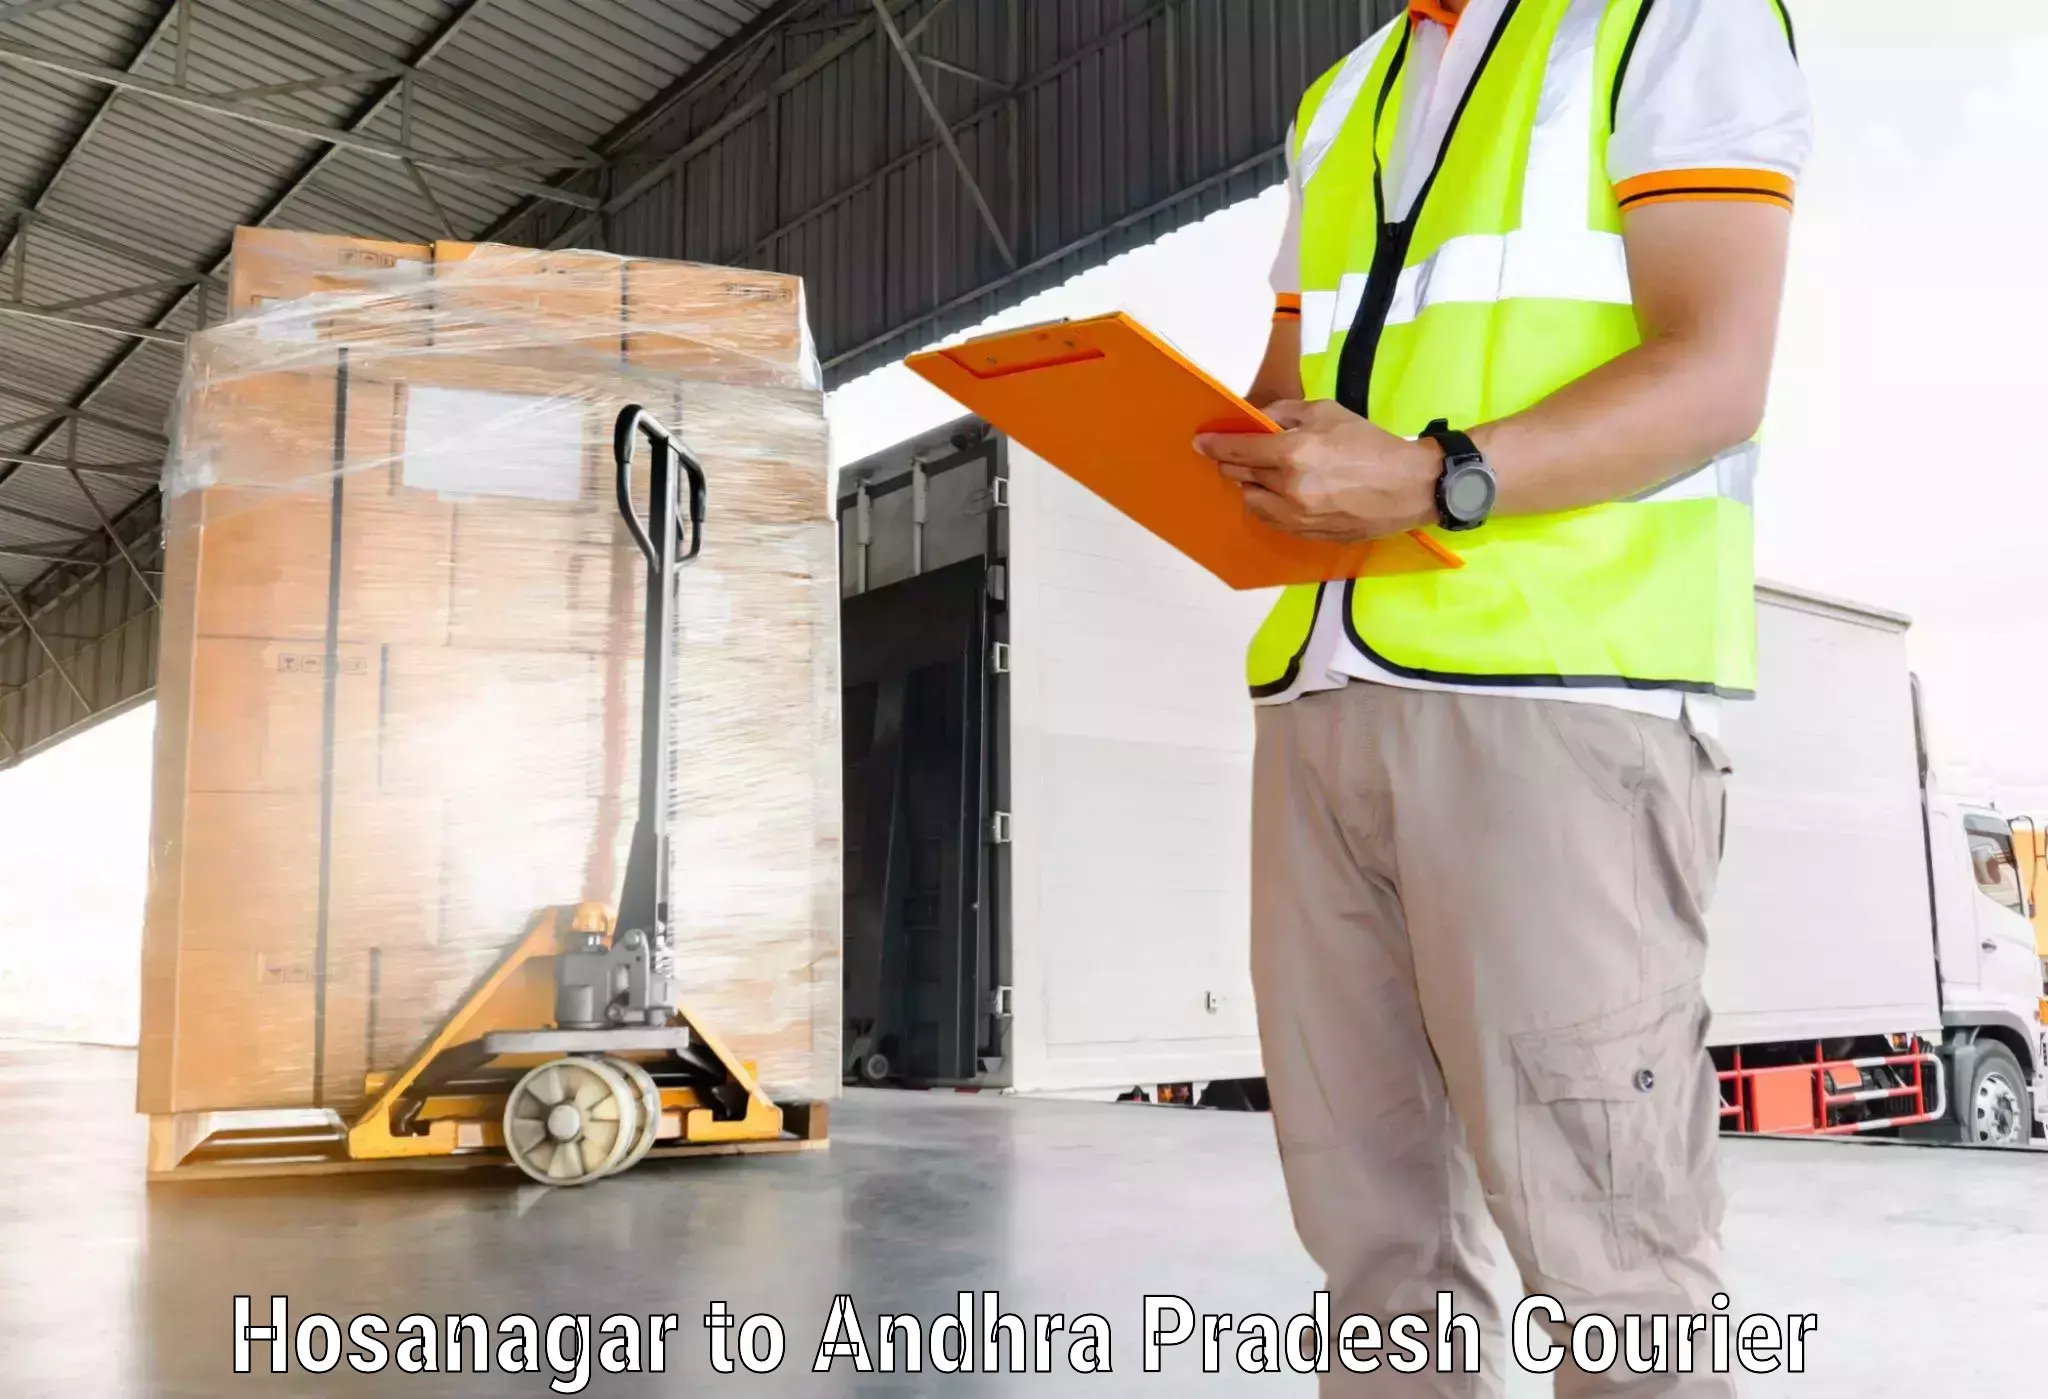 Courier service partnerships Hosanagar to Vinukonda